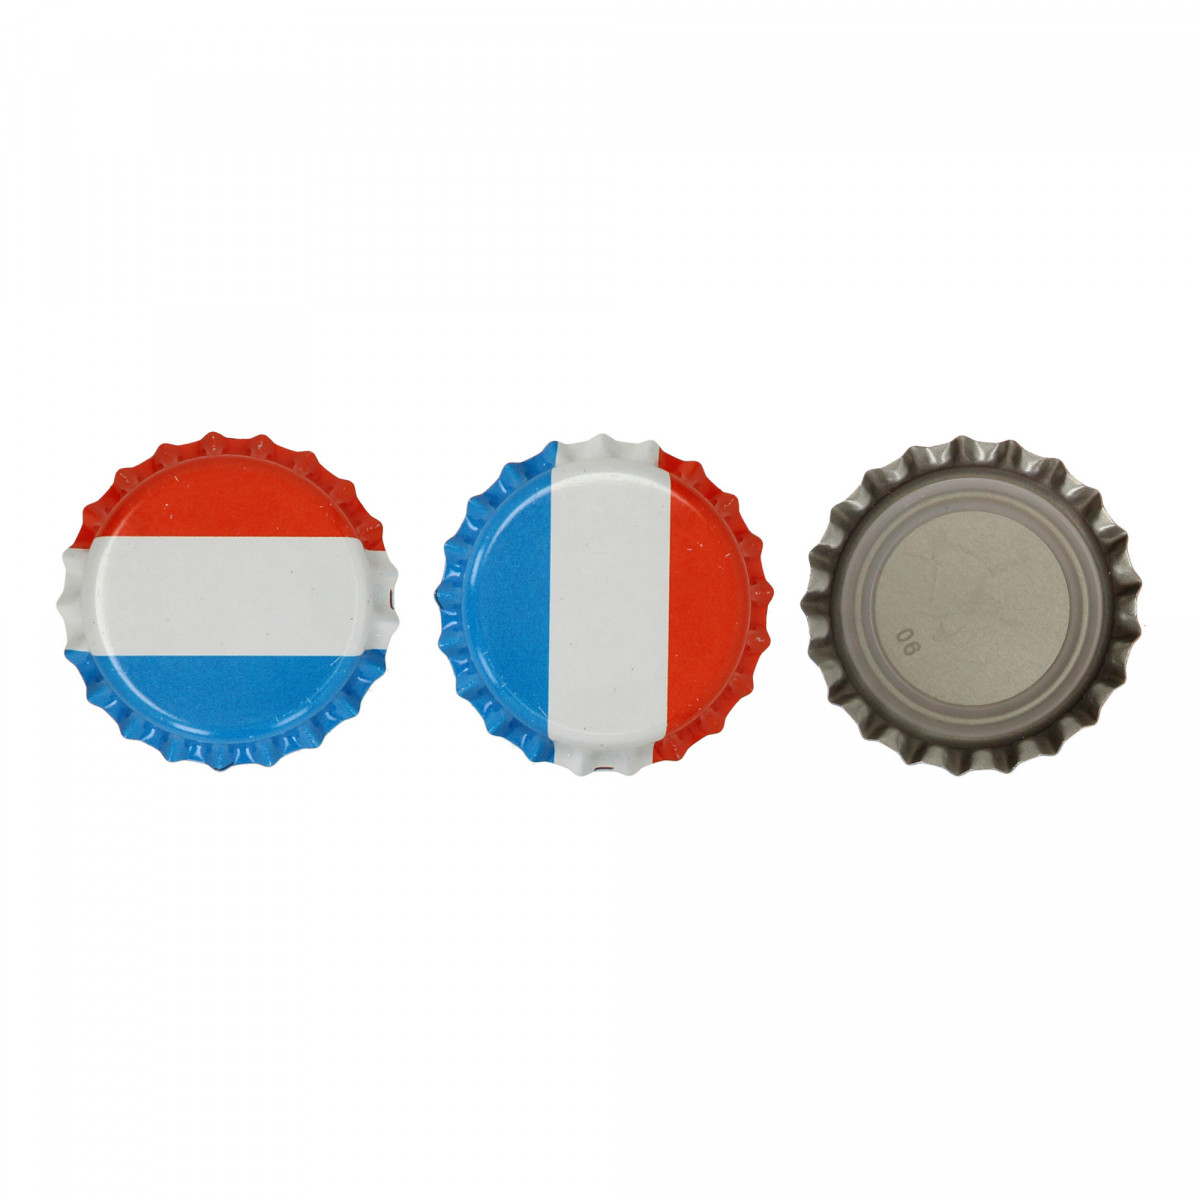 Crown corks 26 mm - oxygen scavenging - French/Dutch flag  - 10,000 pcs